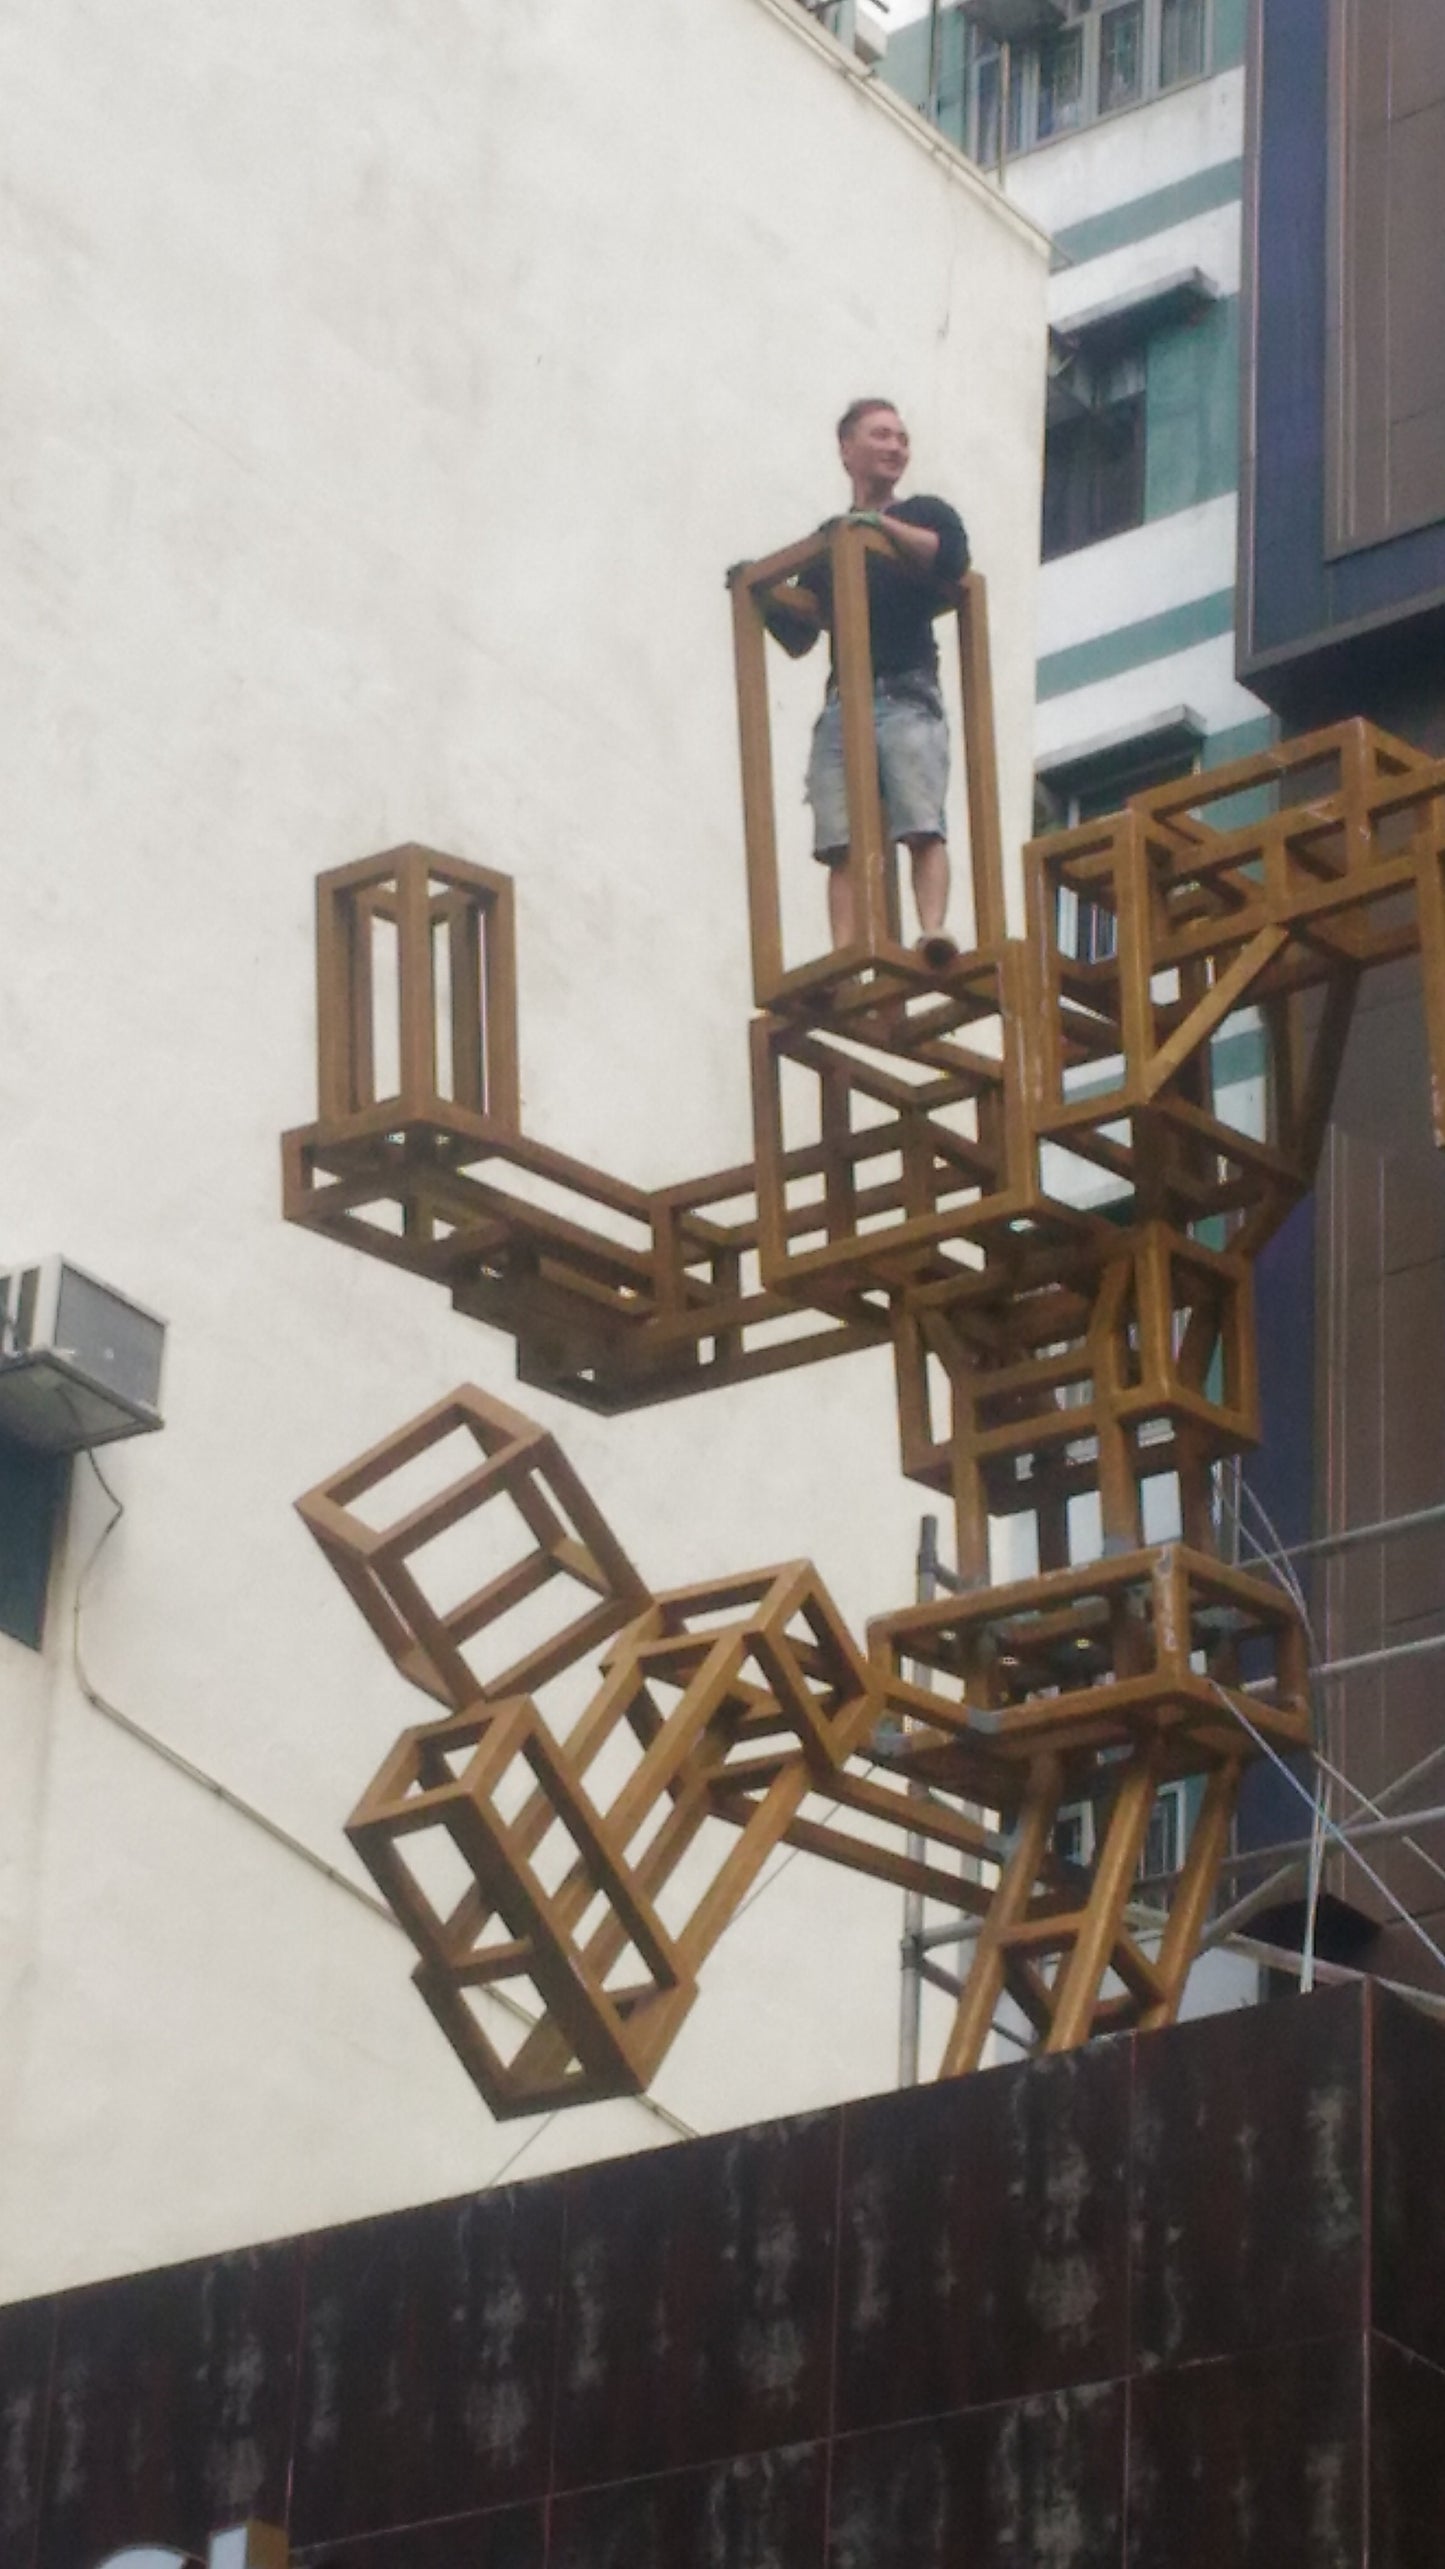 Stainless Steel Pixel Robot Sculpture